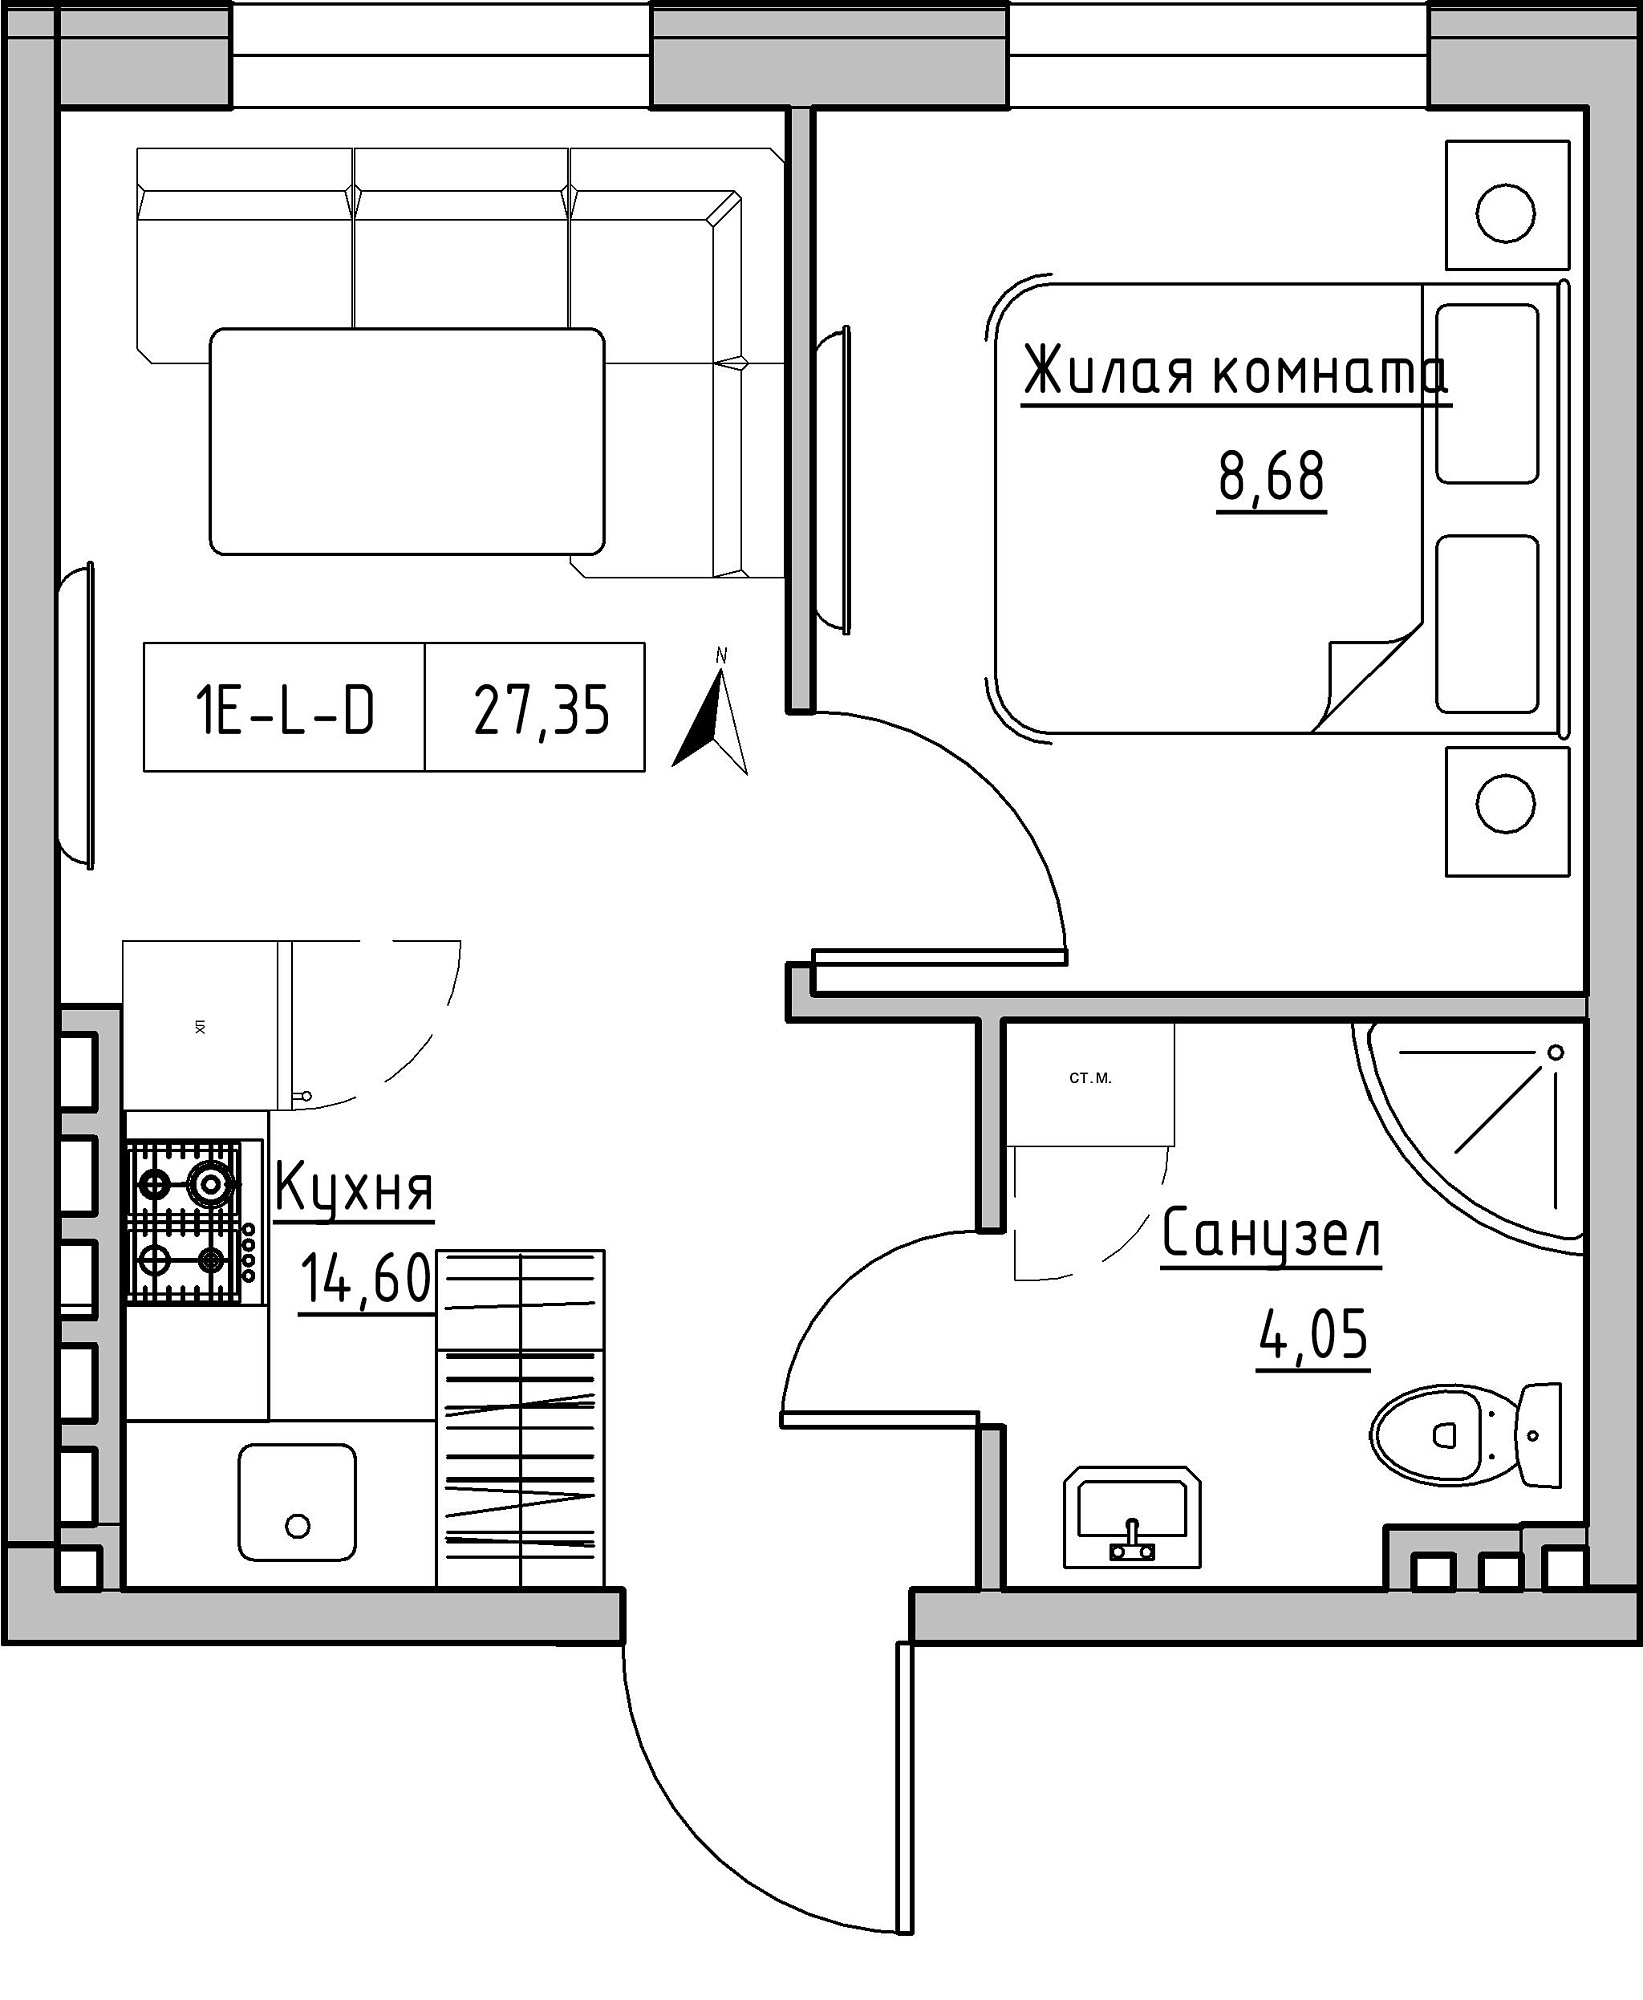 Planning 1-rm flats area 27.35m2, KS-024-05/0002.